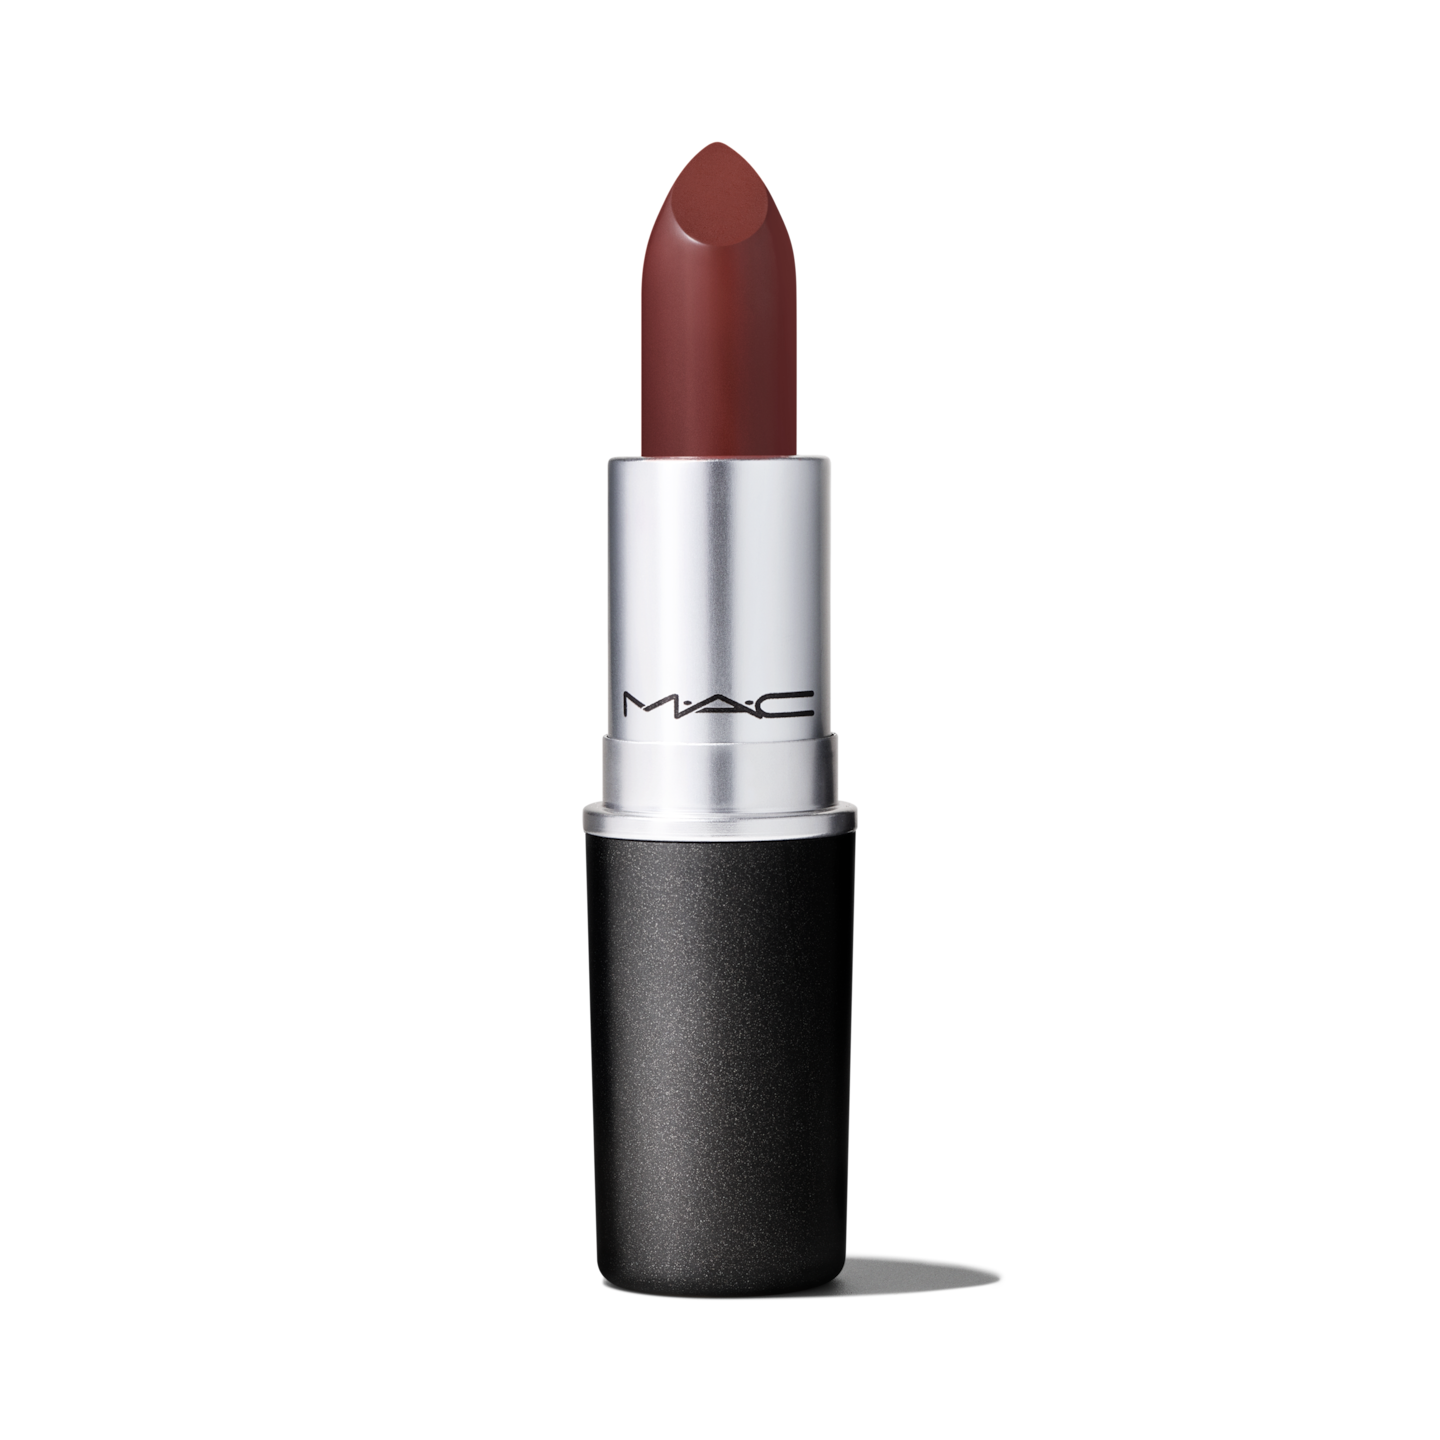 creatief Spuug uit Doen MAC Matte Lipstick | Including Marrakesh, Velvet Teddy, Mehr & Taupe  Lipsticks | MAC Cosmetics - Official Site